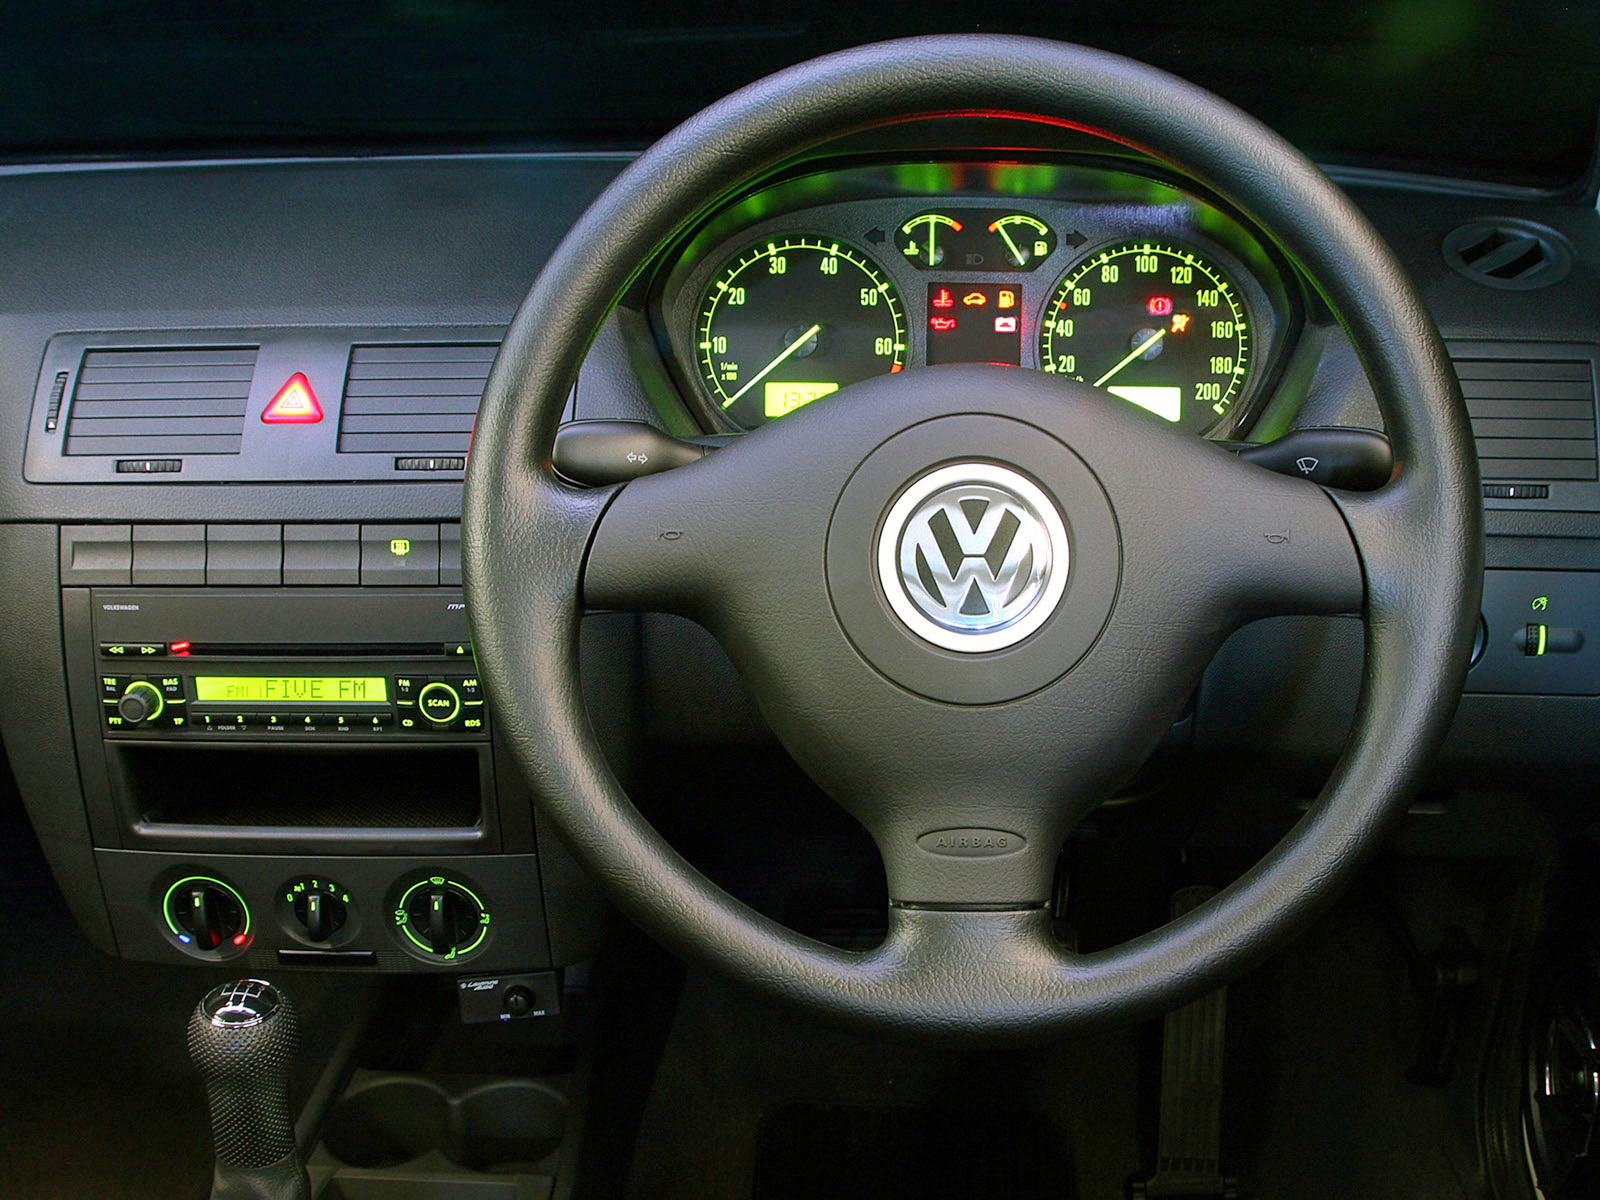 VW, Volkswagen, Citi Golf, Citi, Golf, Mark 1, Mk1, Rabbit, R, Sonic, 2003